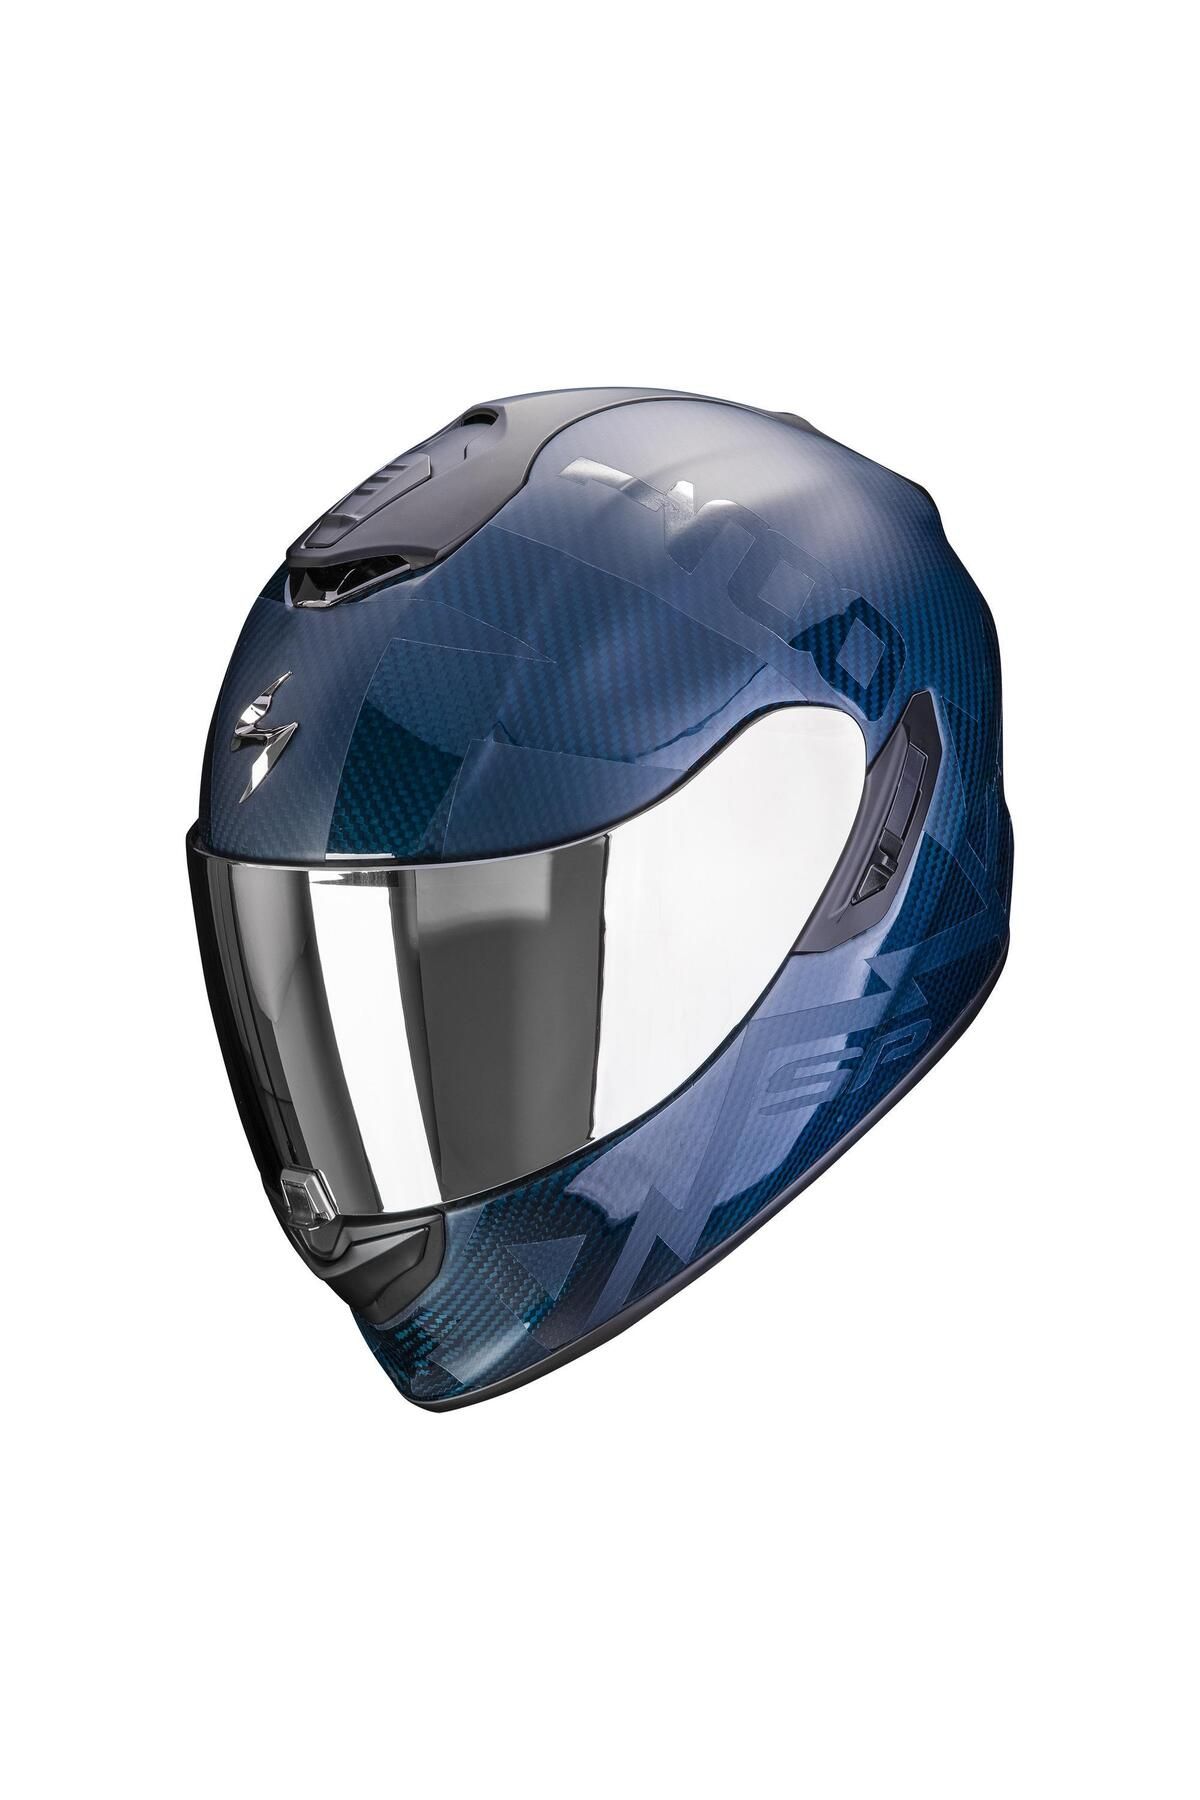 Scorpion Exo 1400 Evo Air Carbon Cerebro Kapalı Motosiklet Kaskı Mavi